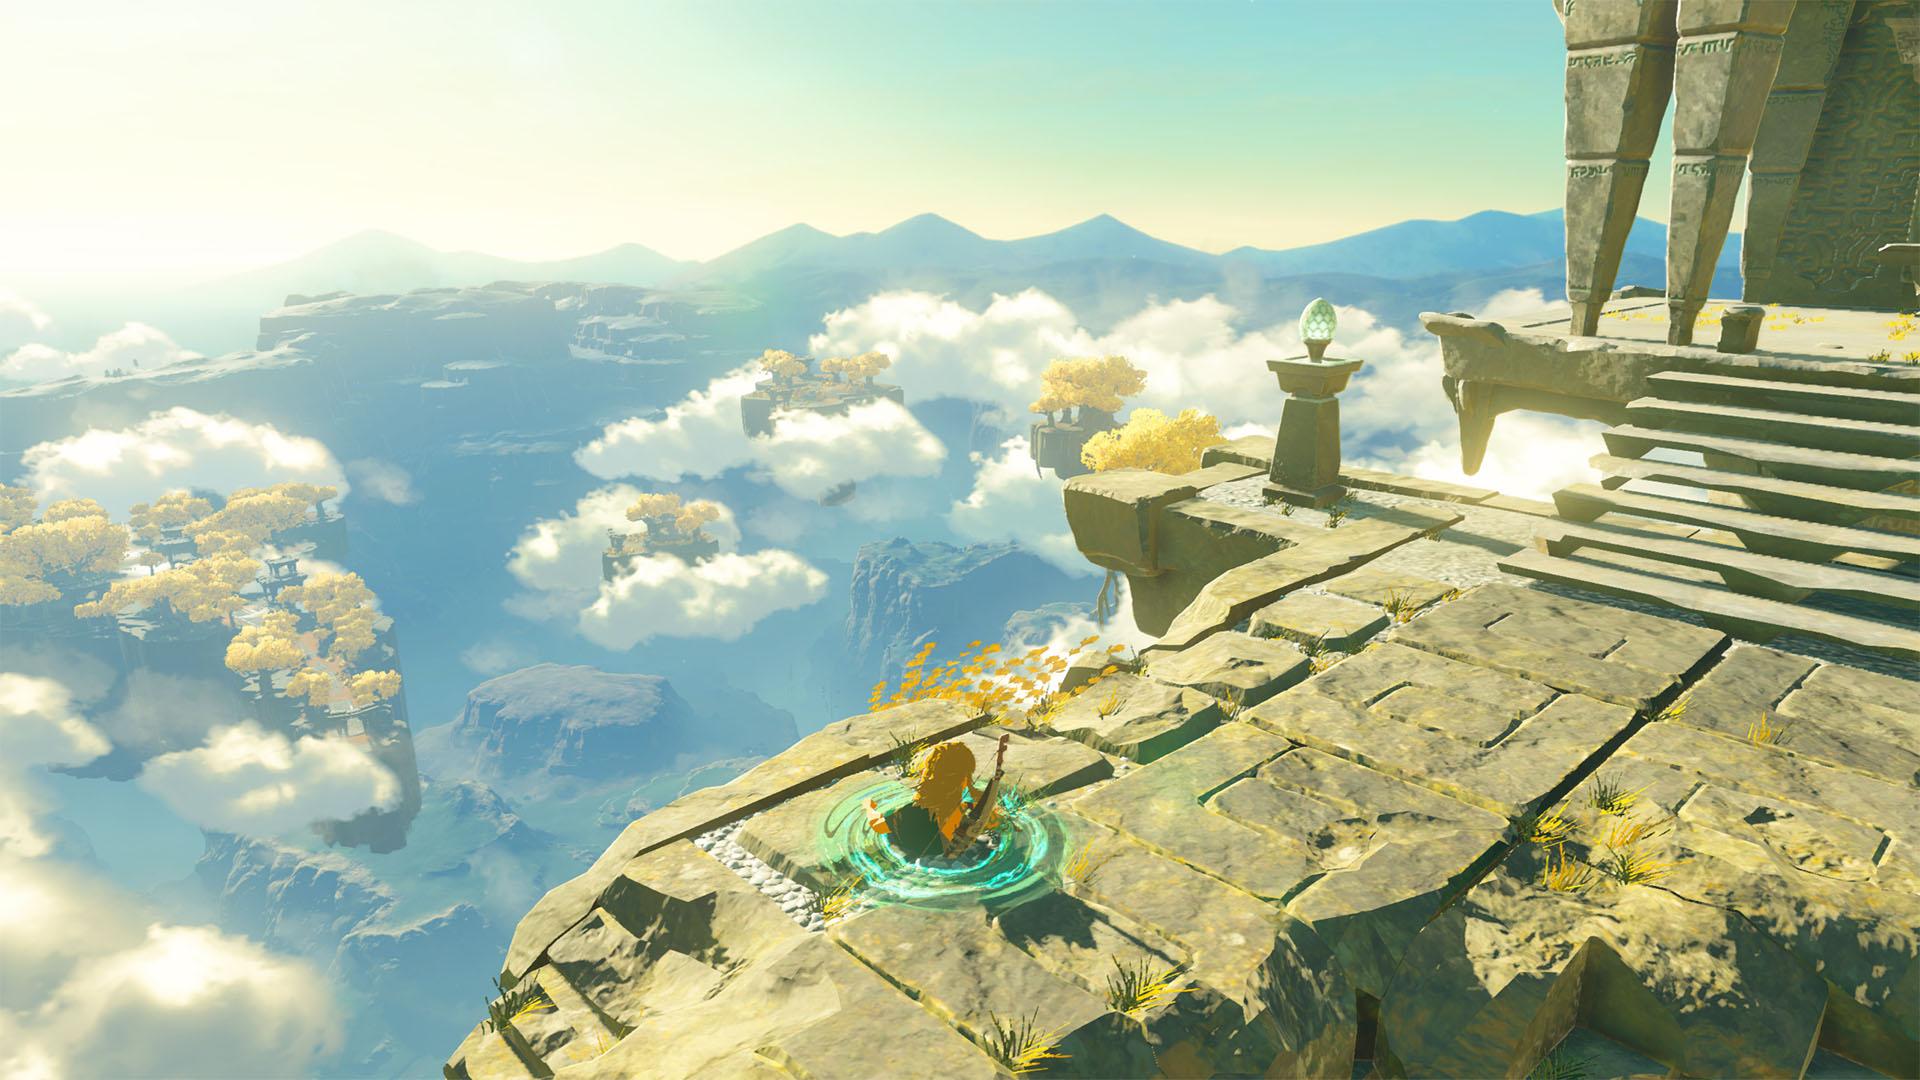 Obrázok z hry The Legend of Zelda: Tears of the Kingdom.